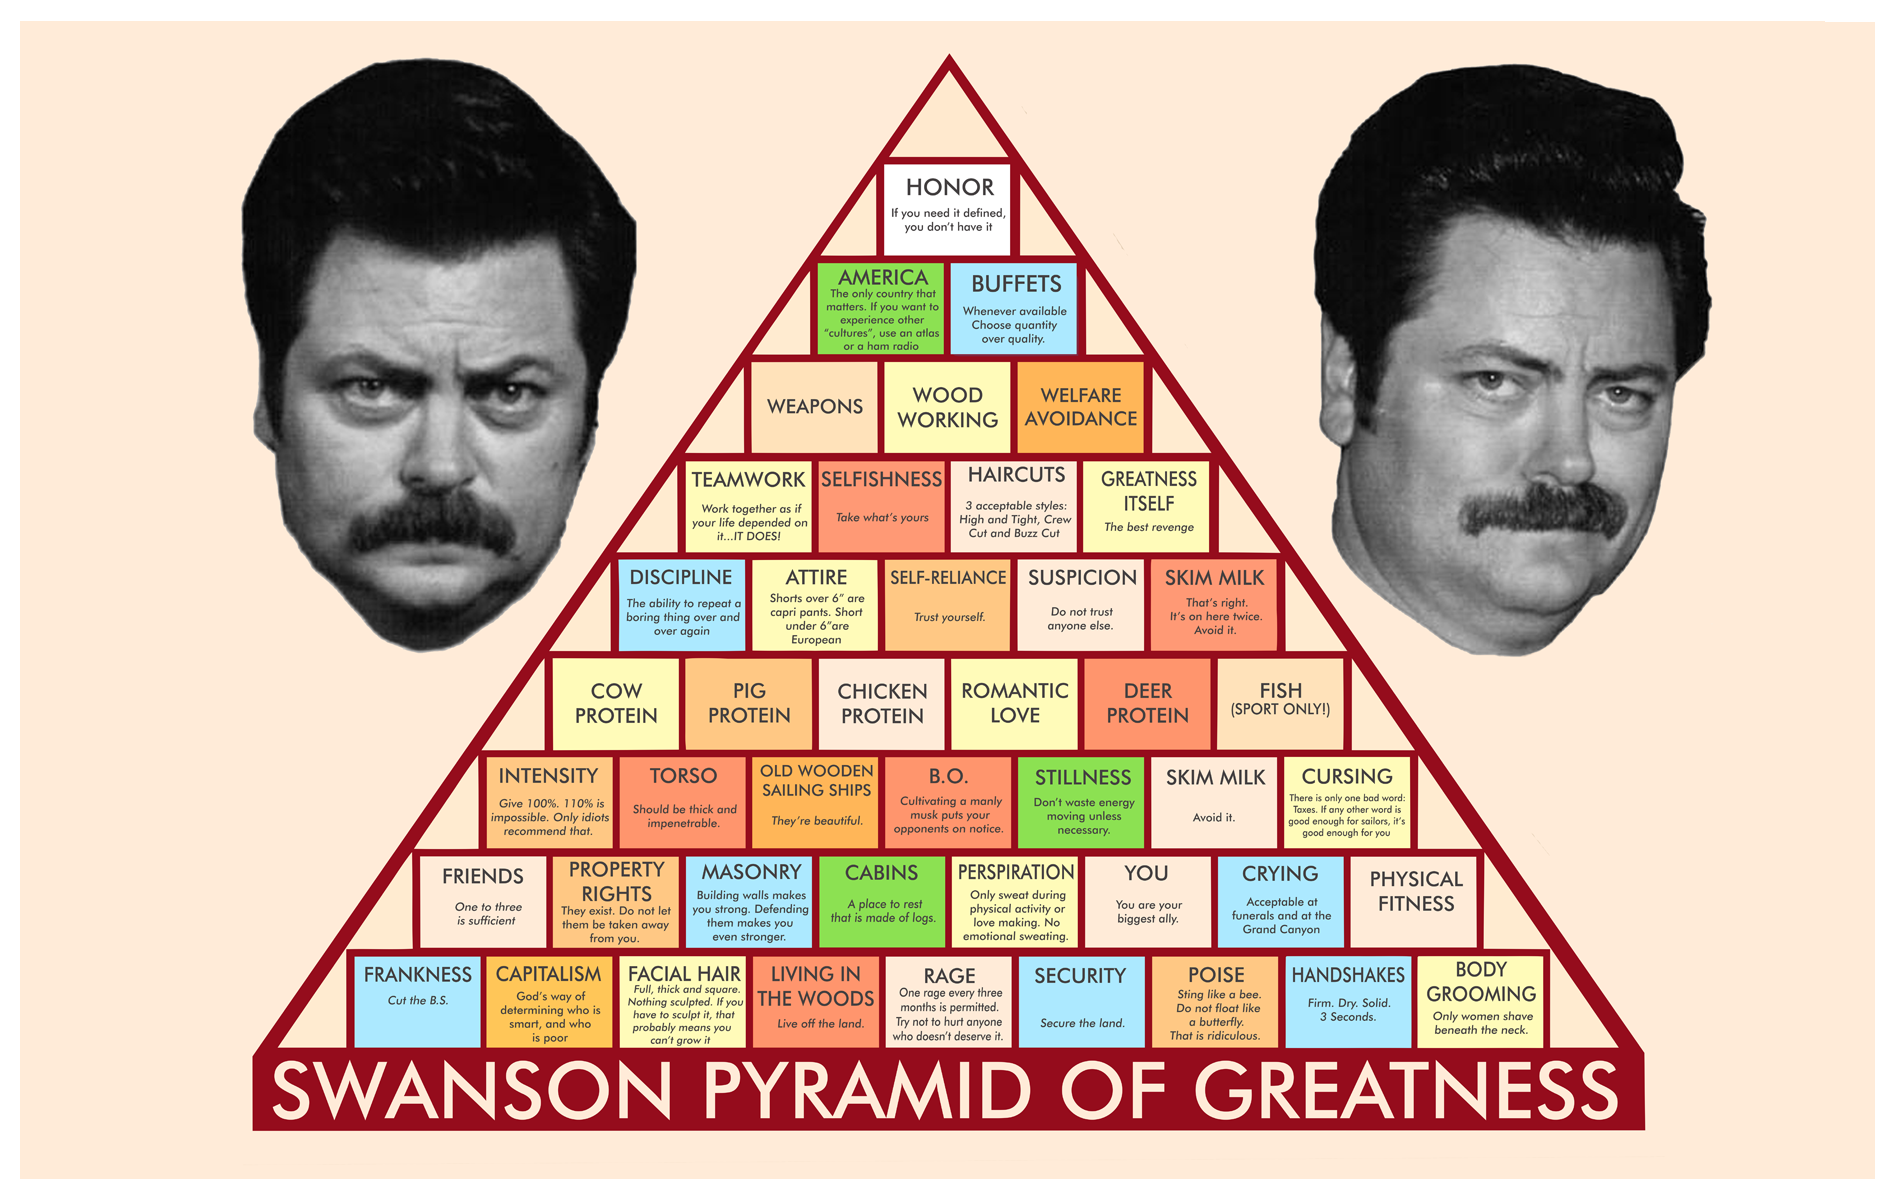 swanson-pyramid-of-greatness-1900x1200